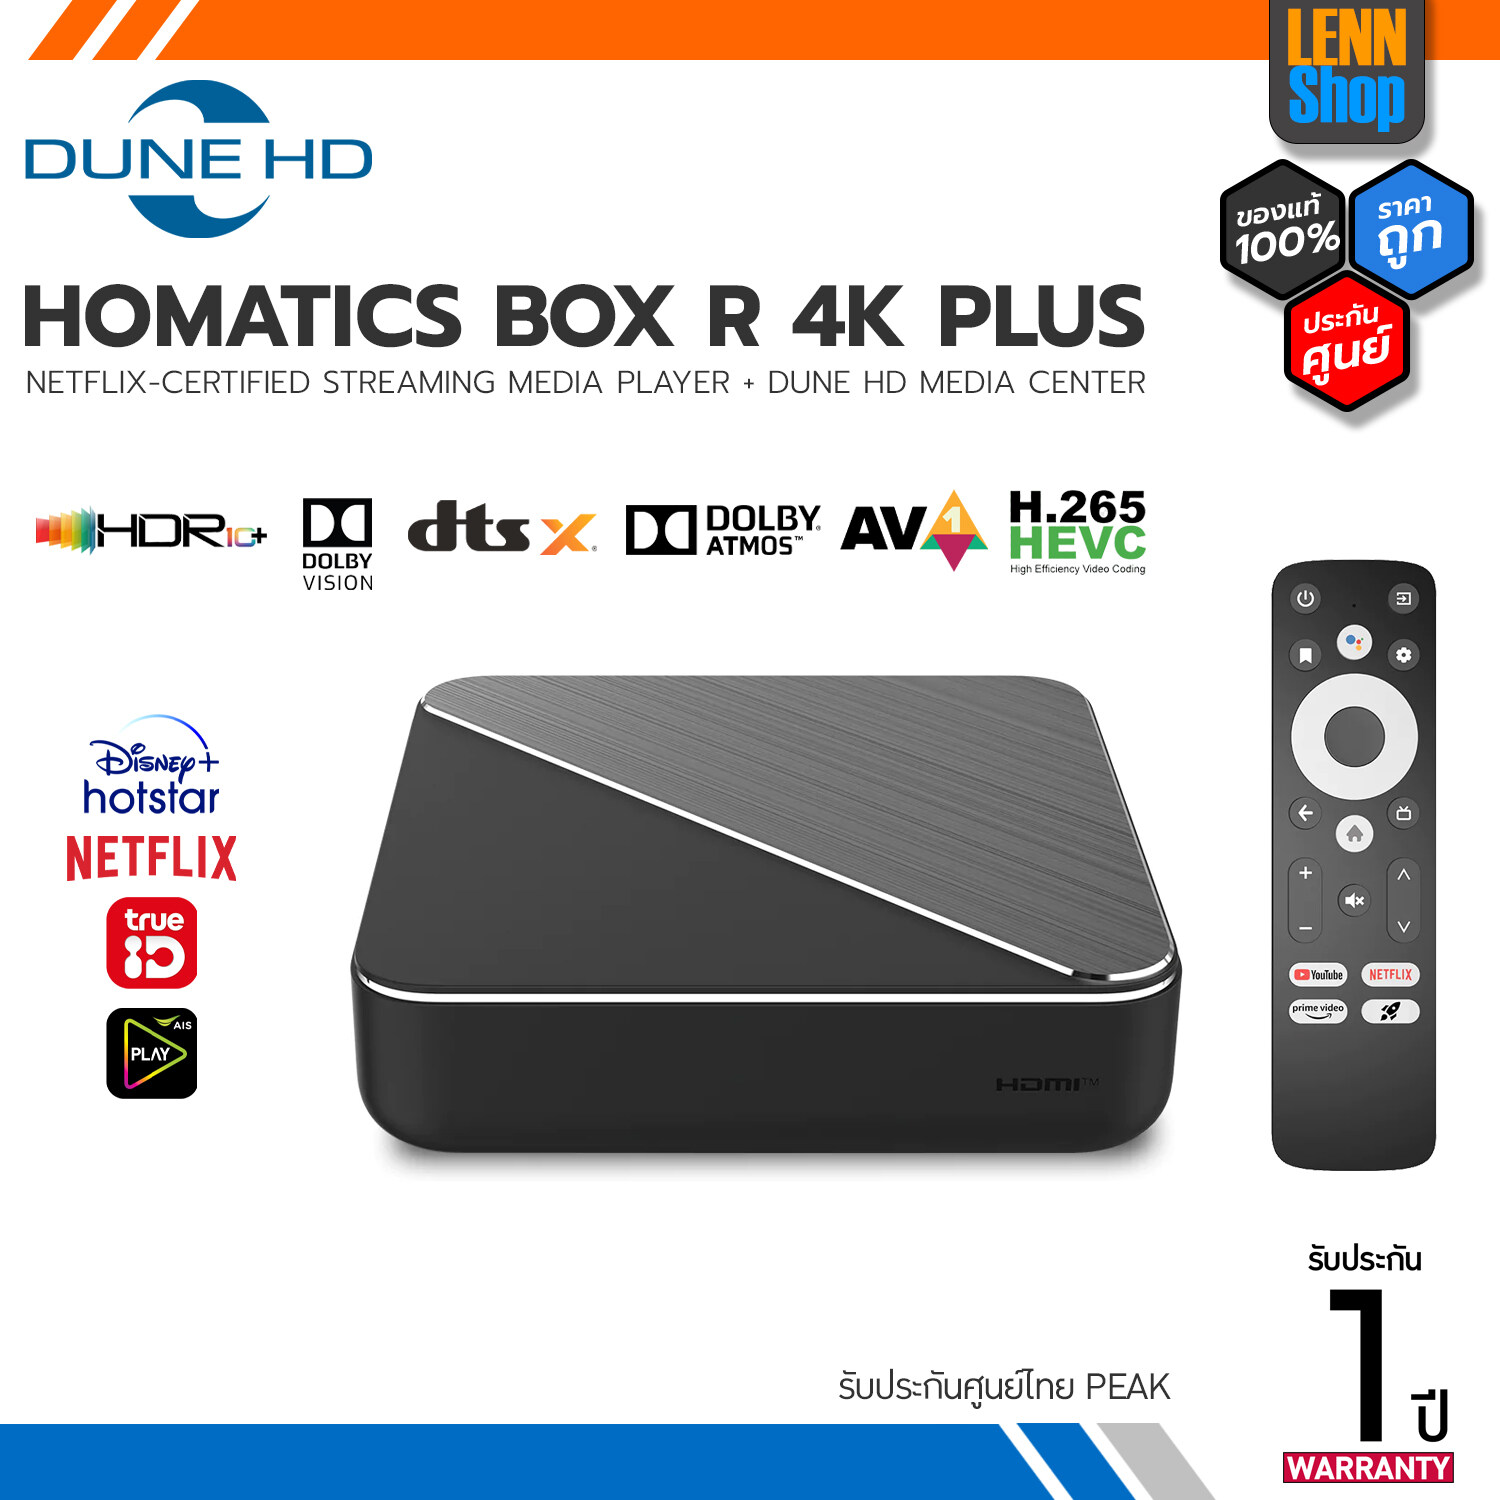 Dune HD Homatics Box R 4K Plus – DUNE HD